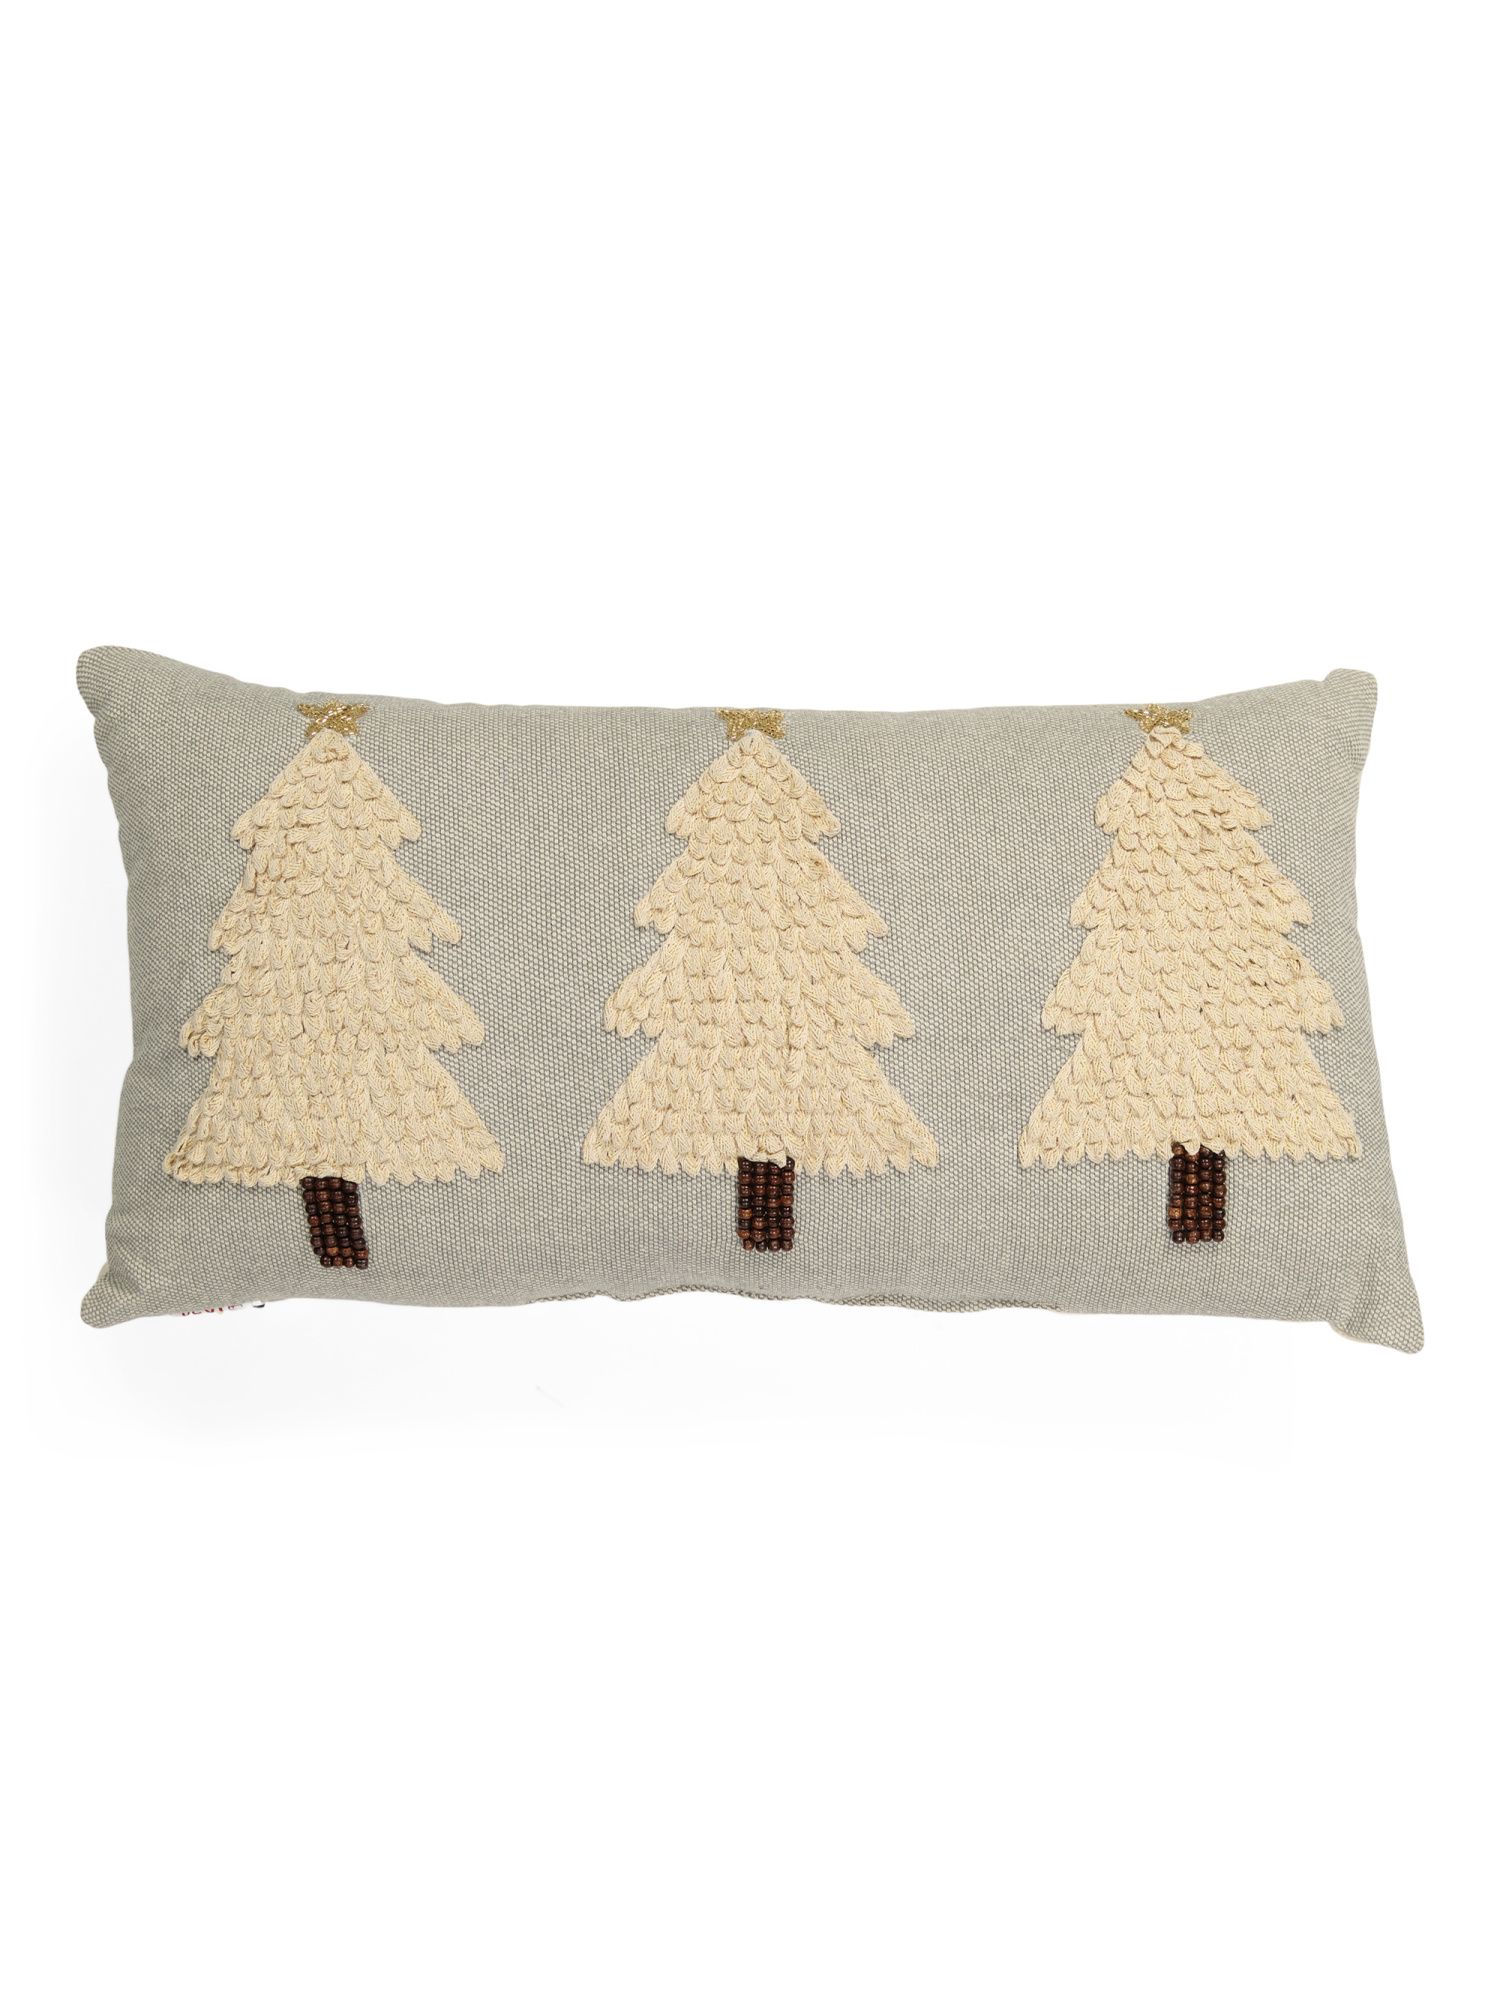 14x26 Tree Pillow | Pillows & Decor | Marshalls | Marshalls